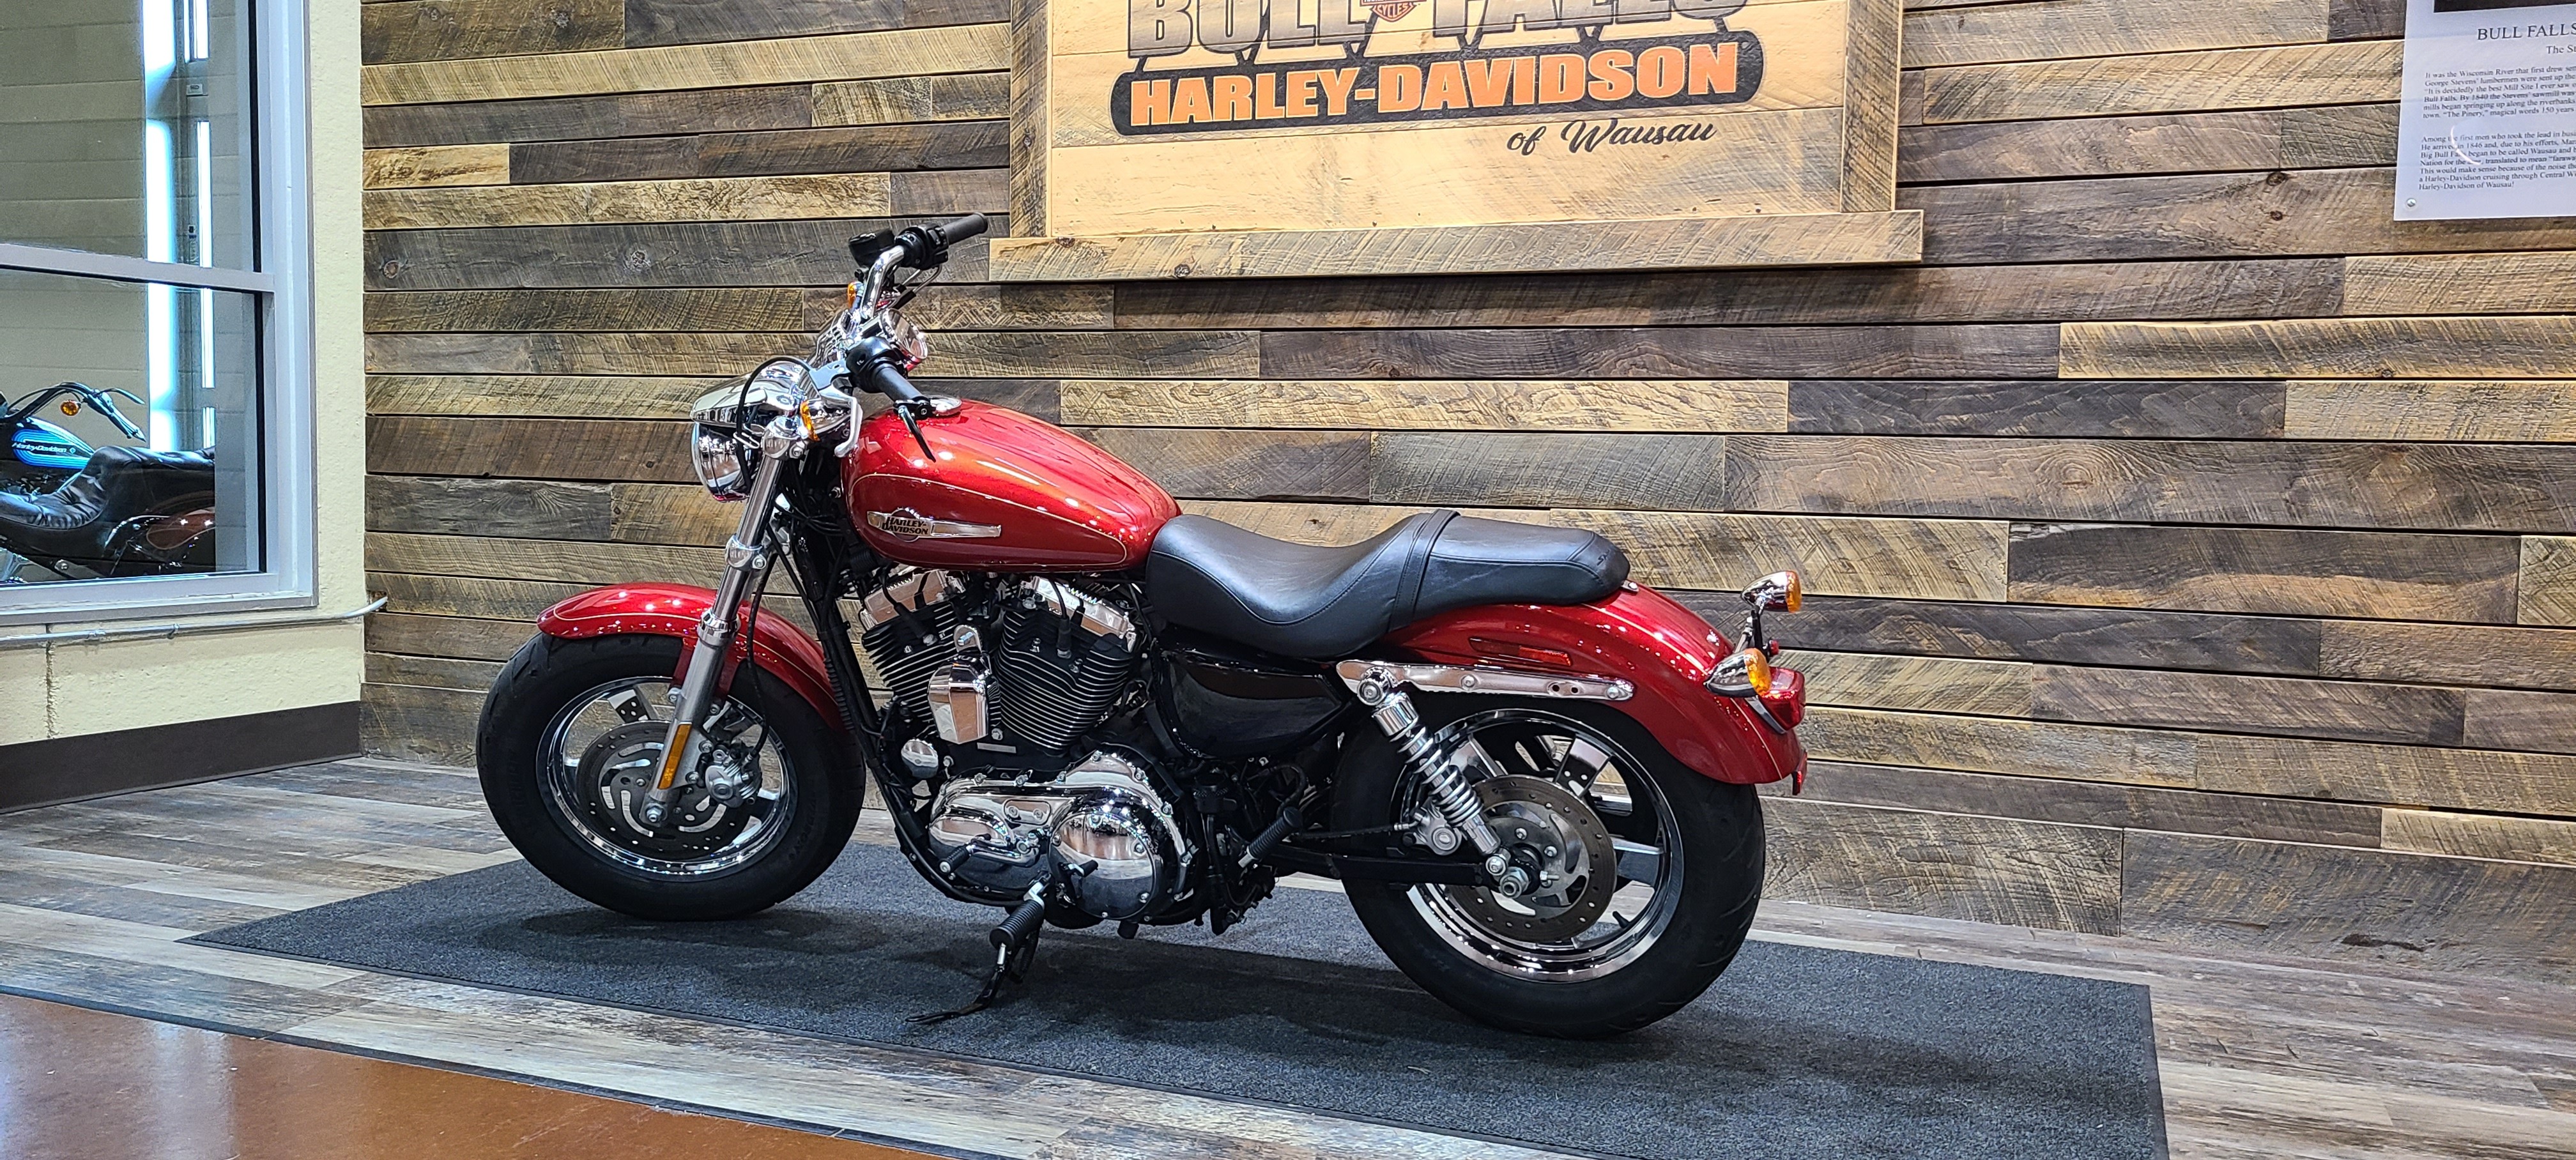 2013 Harley-Davidson Sportster 1200 Custom at Bull Falls Harley-Davidson